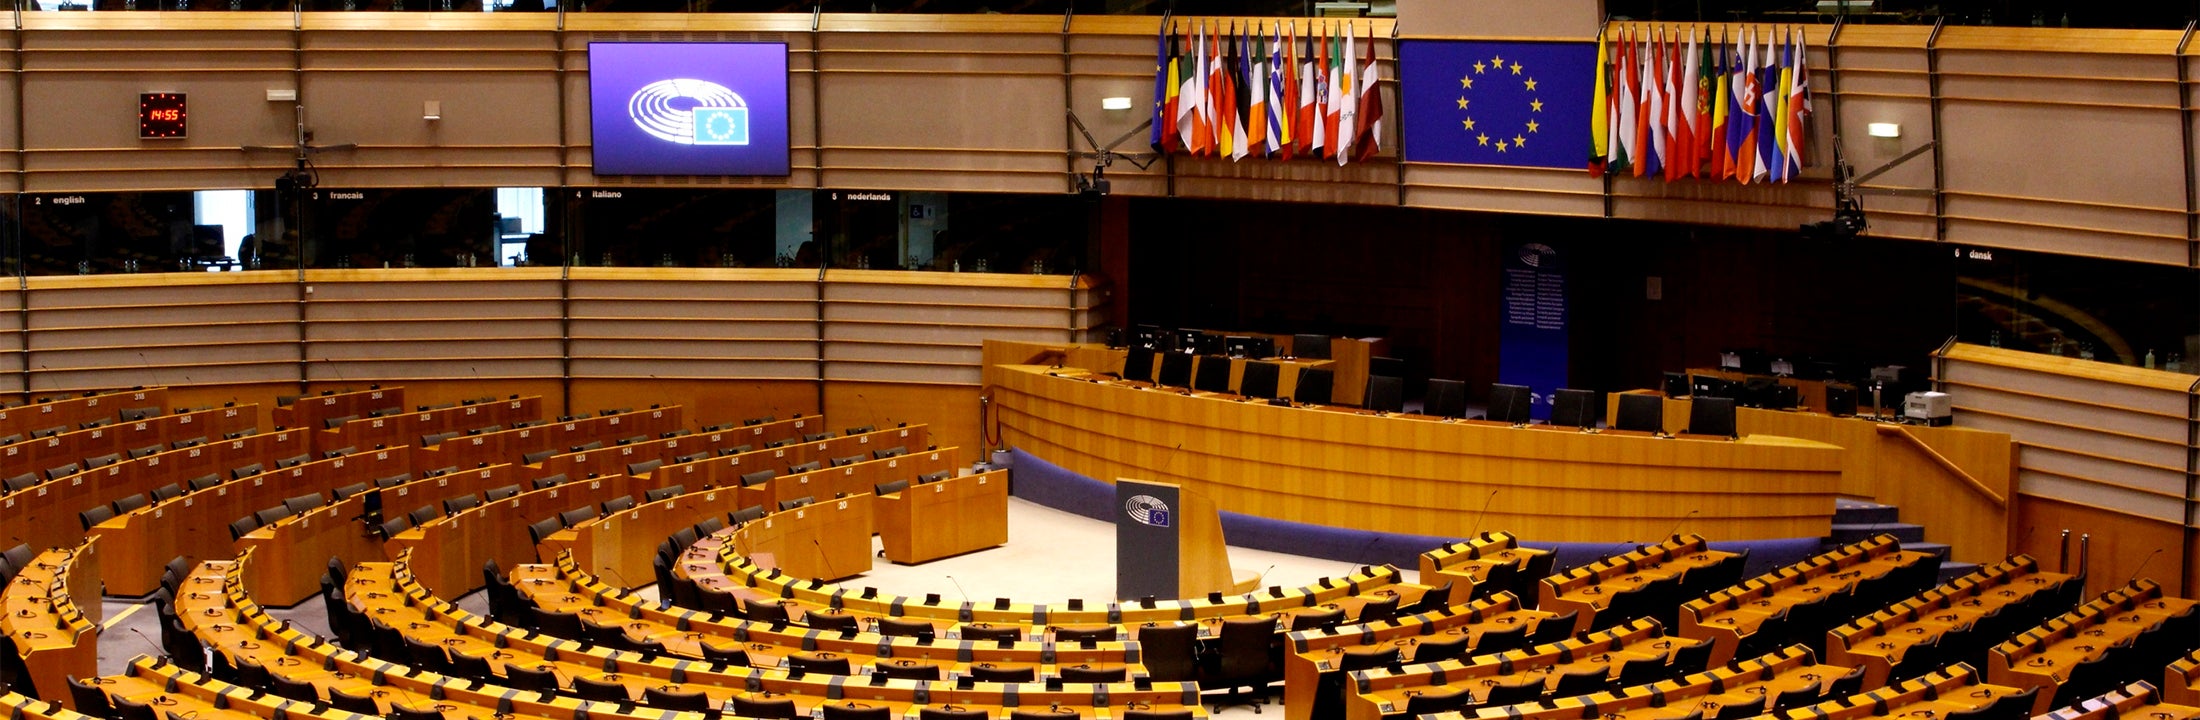 The European Parliament Hemicycle